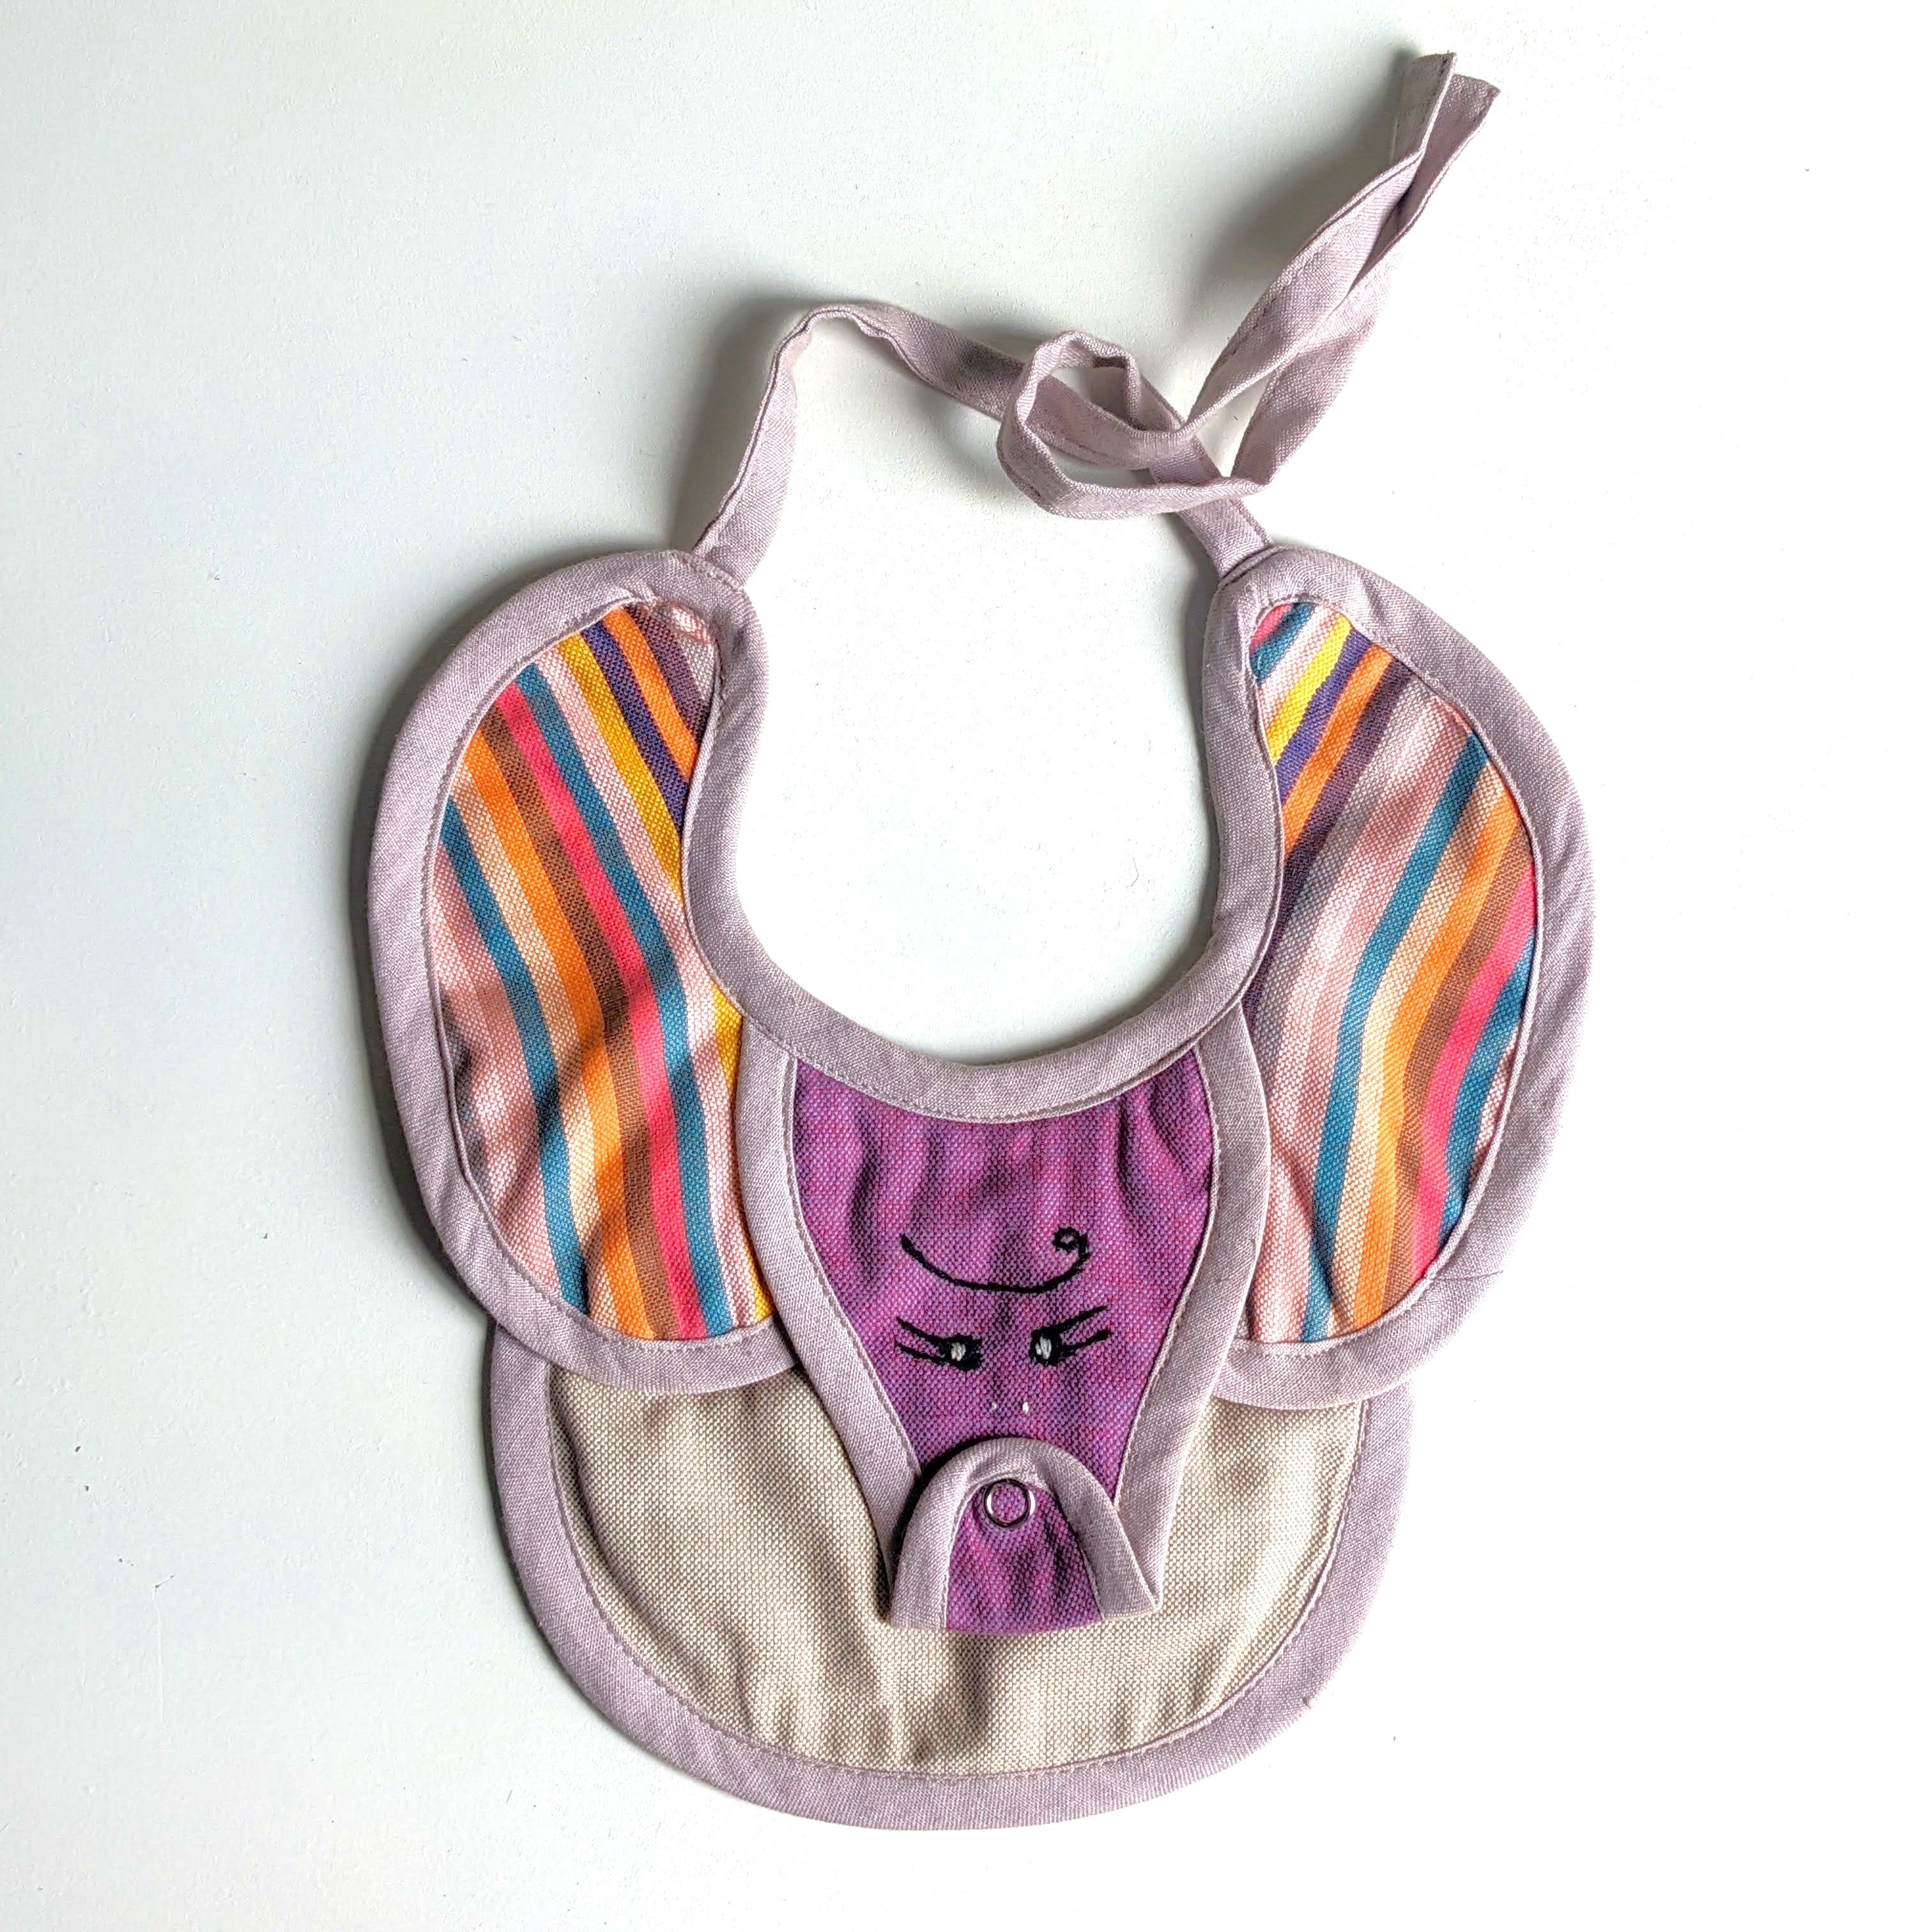 Elephant Baby Bib handmade by women of Amani ya Juu in Nairobi Kenya